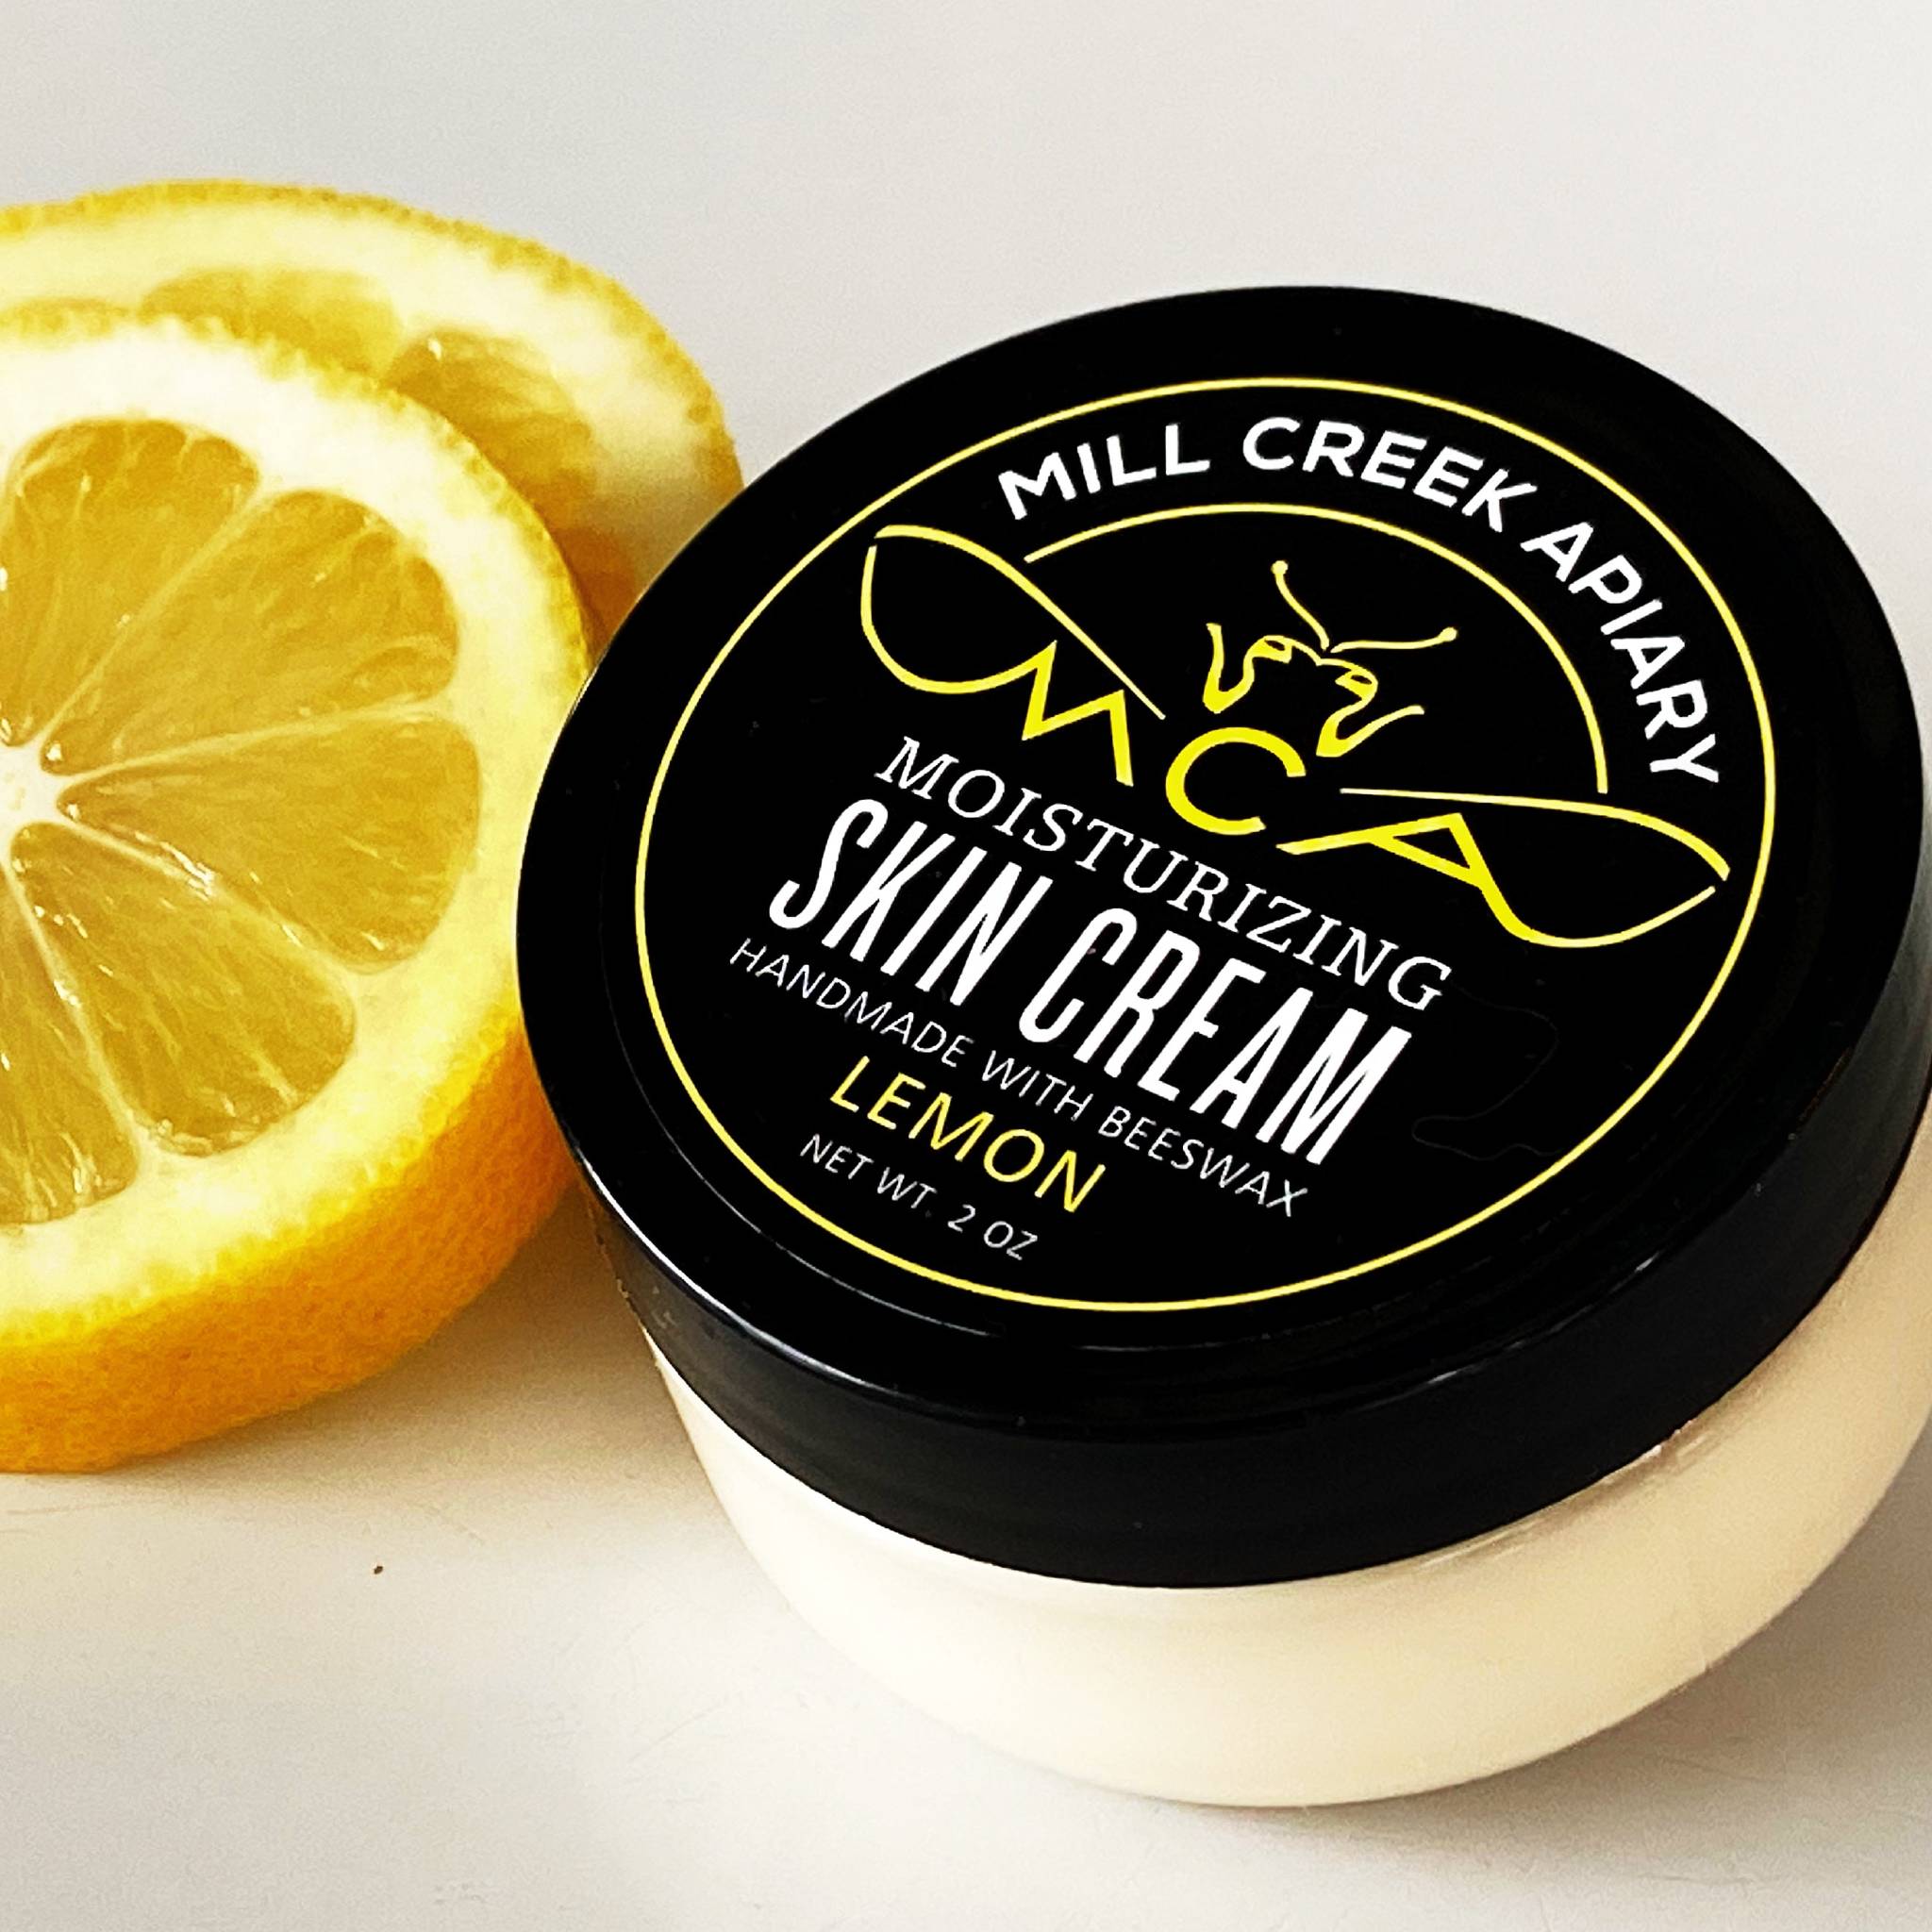 Mill Creek Apiary moisturizing lemon skin cream has the fresh scent of lemon